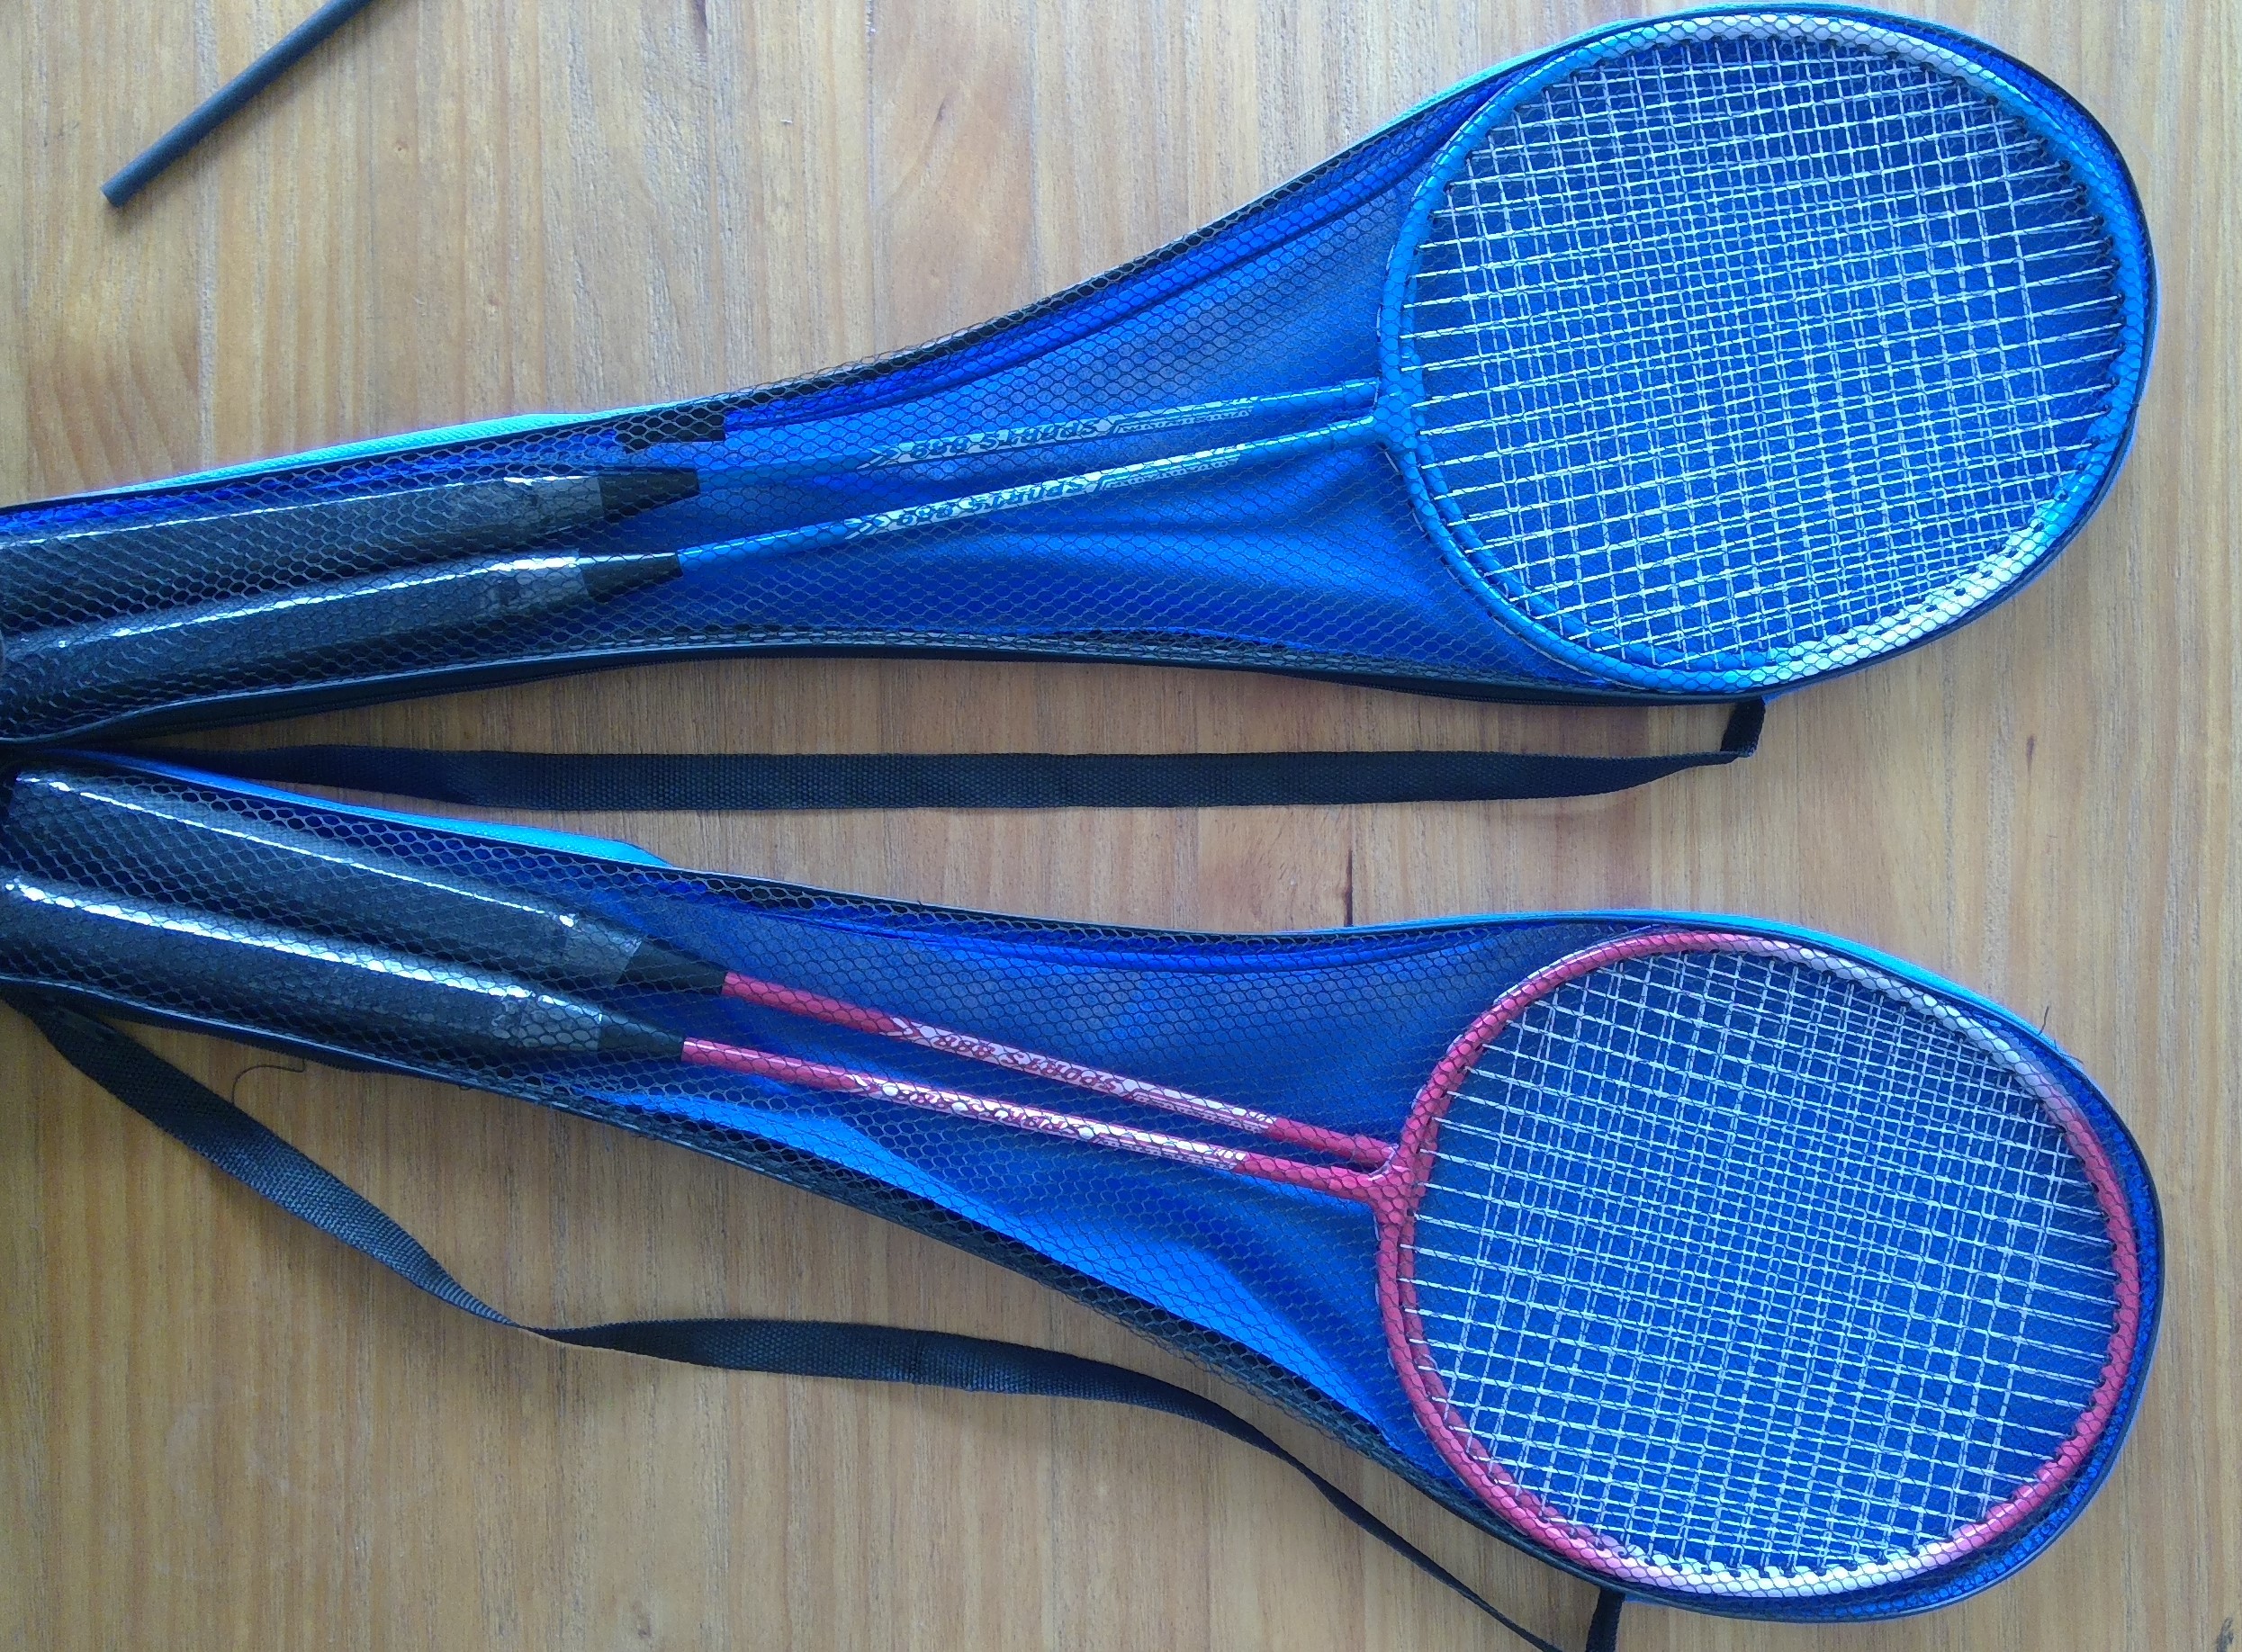 cheap badminton set Manufacturers, cheap badminton set Factory, Supply cheap badminton set